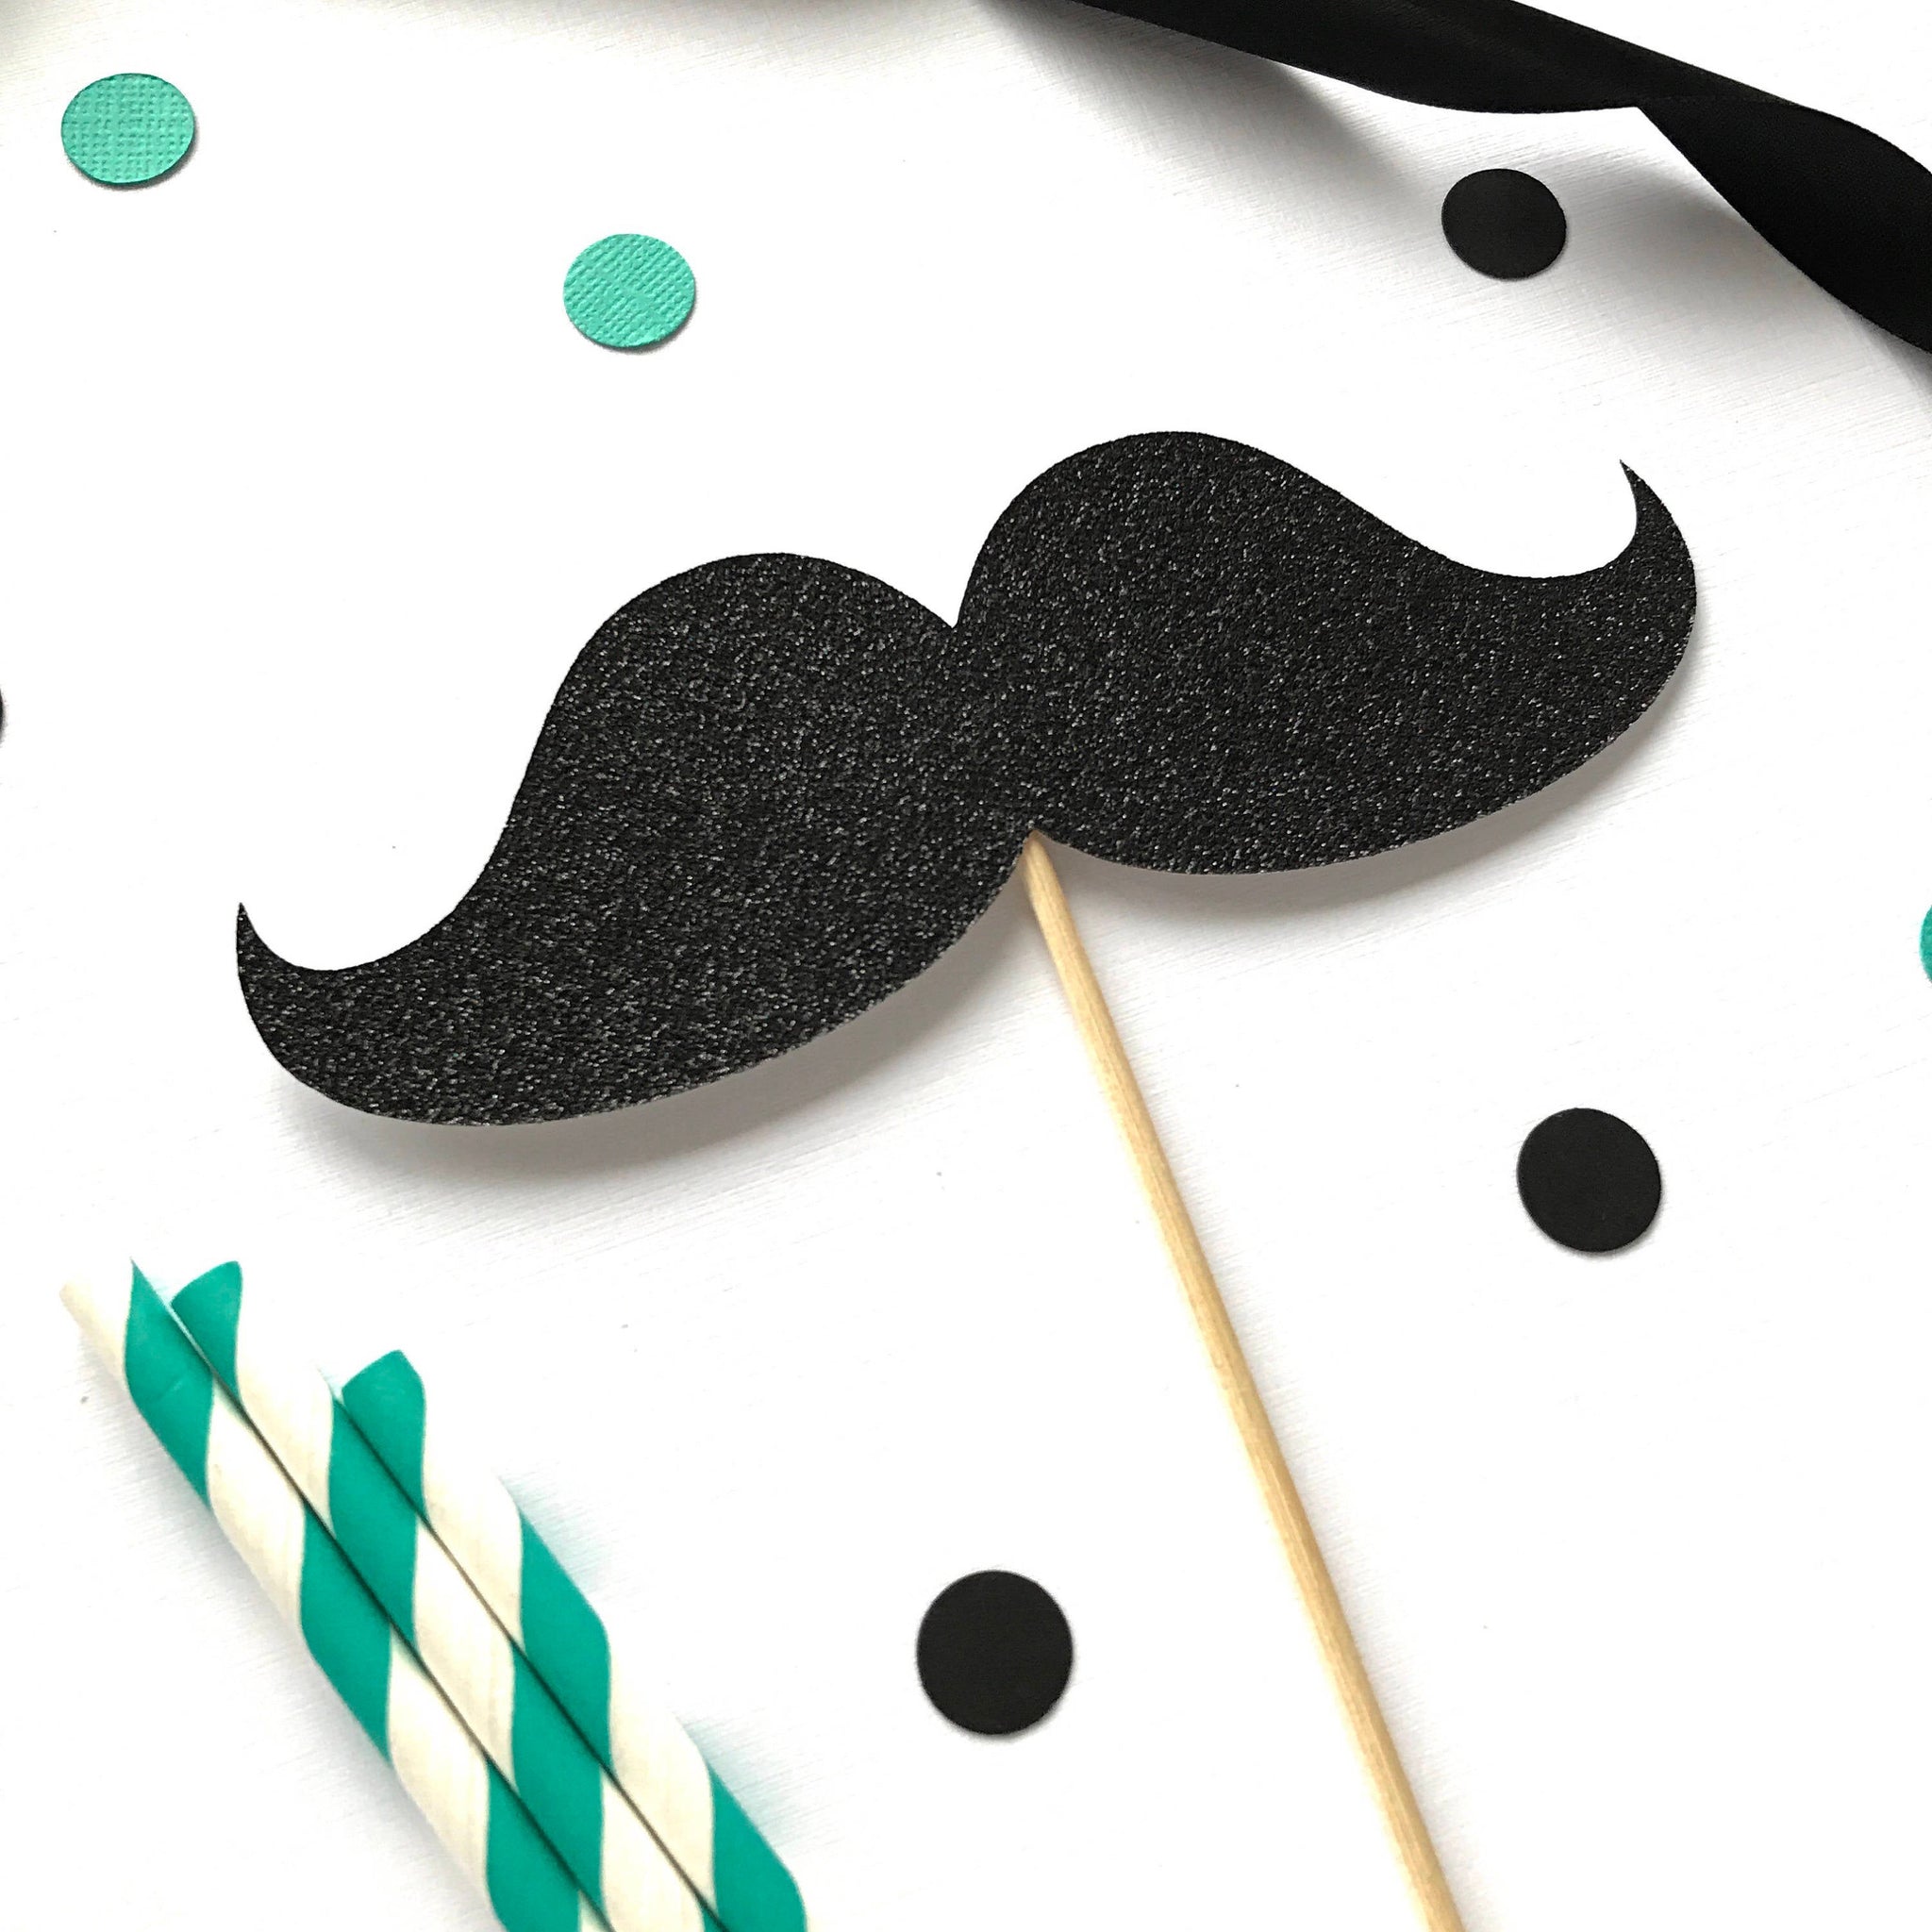 Mustache cake topper - glitterpaperscissors